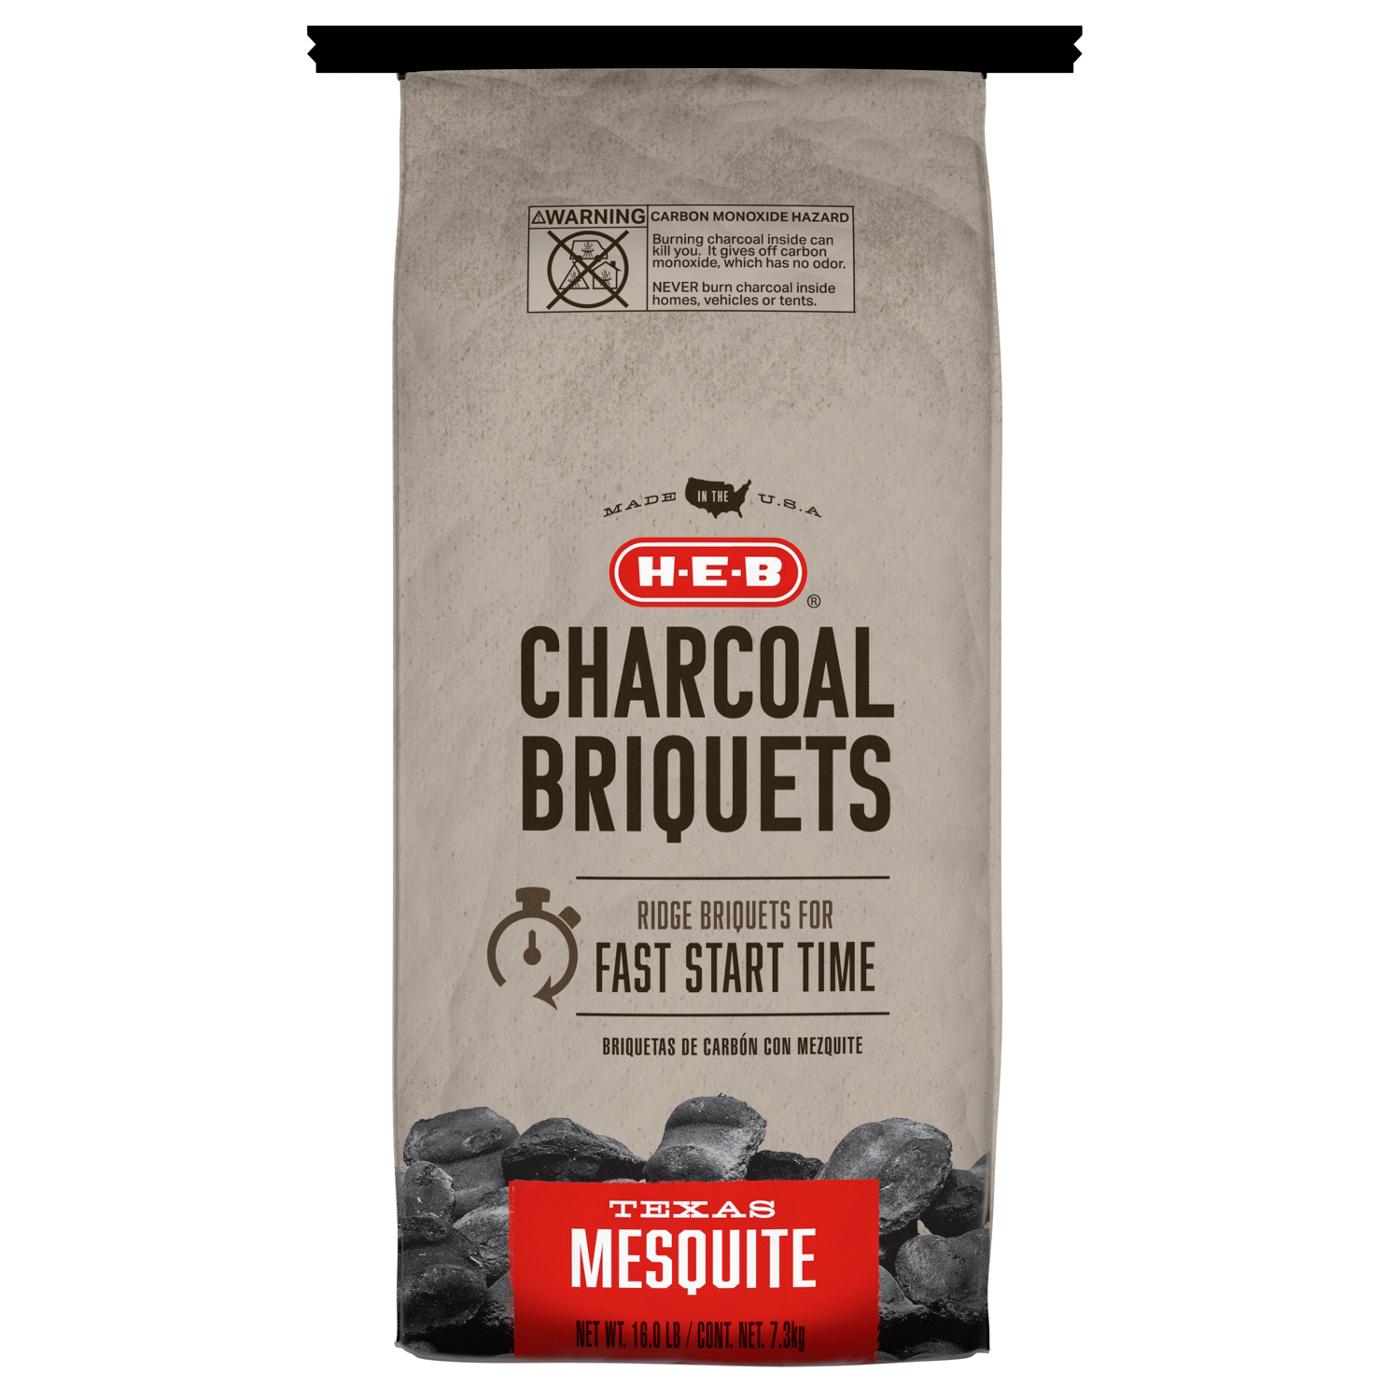 H-E-B Texas Mesquite Charcoal Ridge Briquets; image 1 of 2